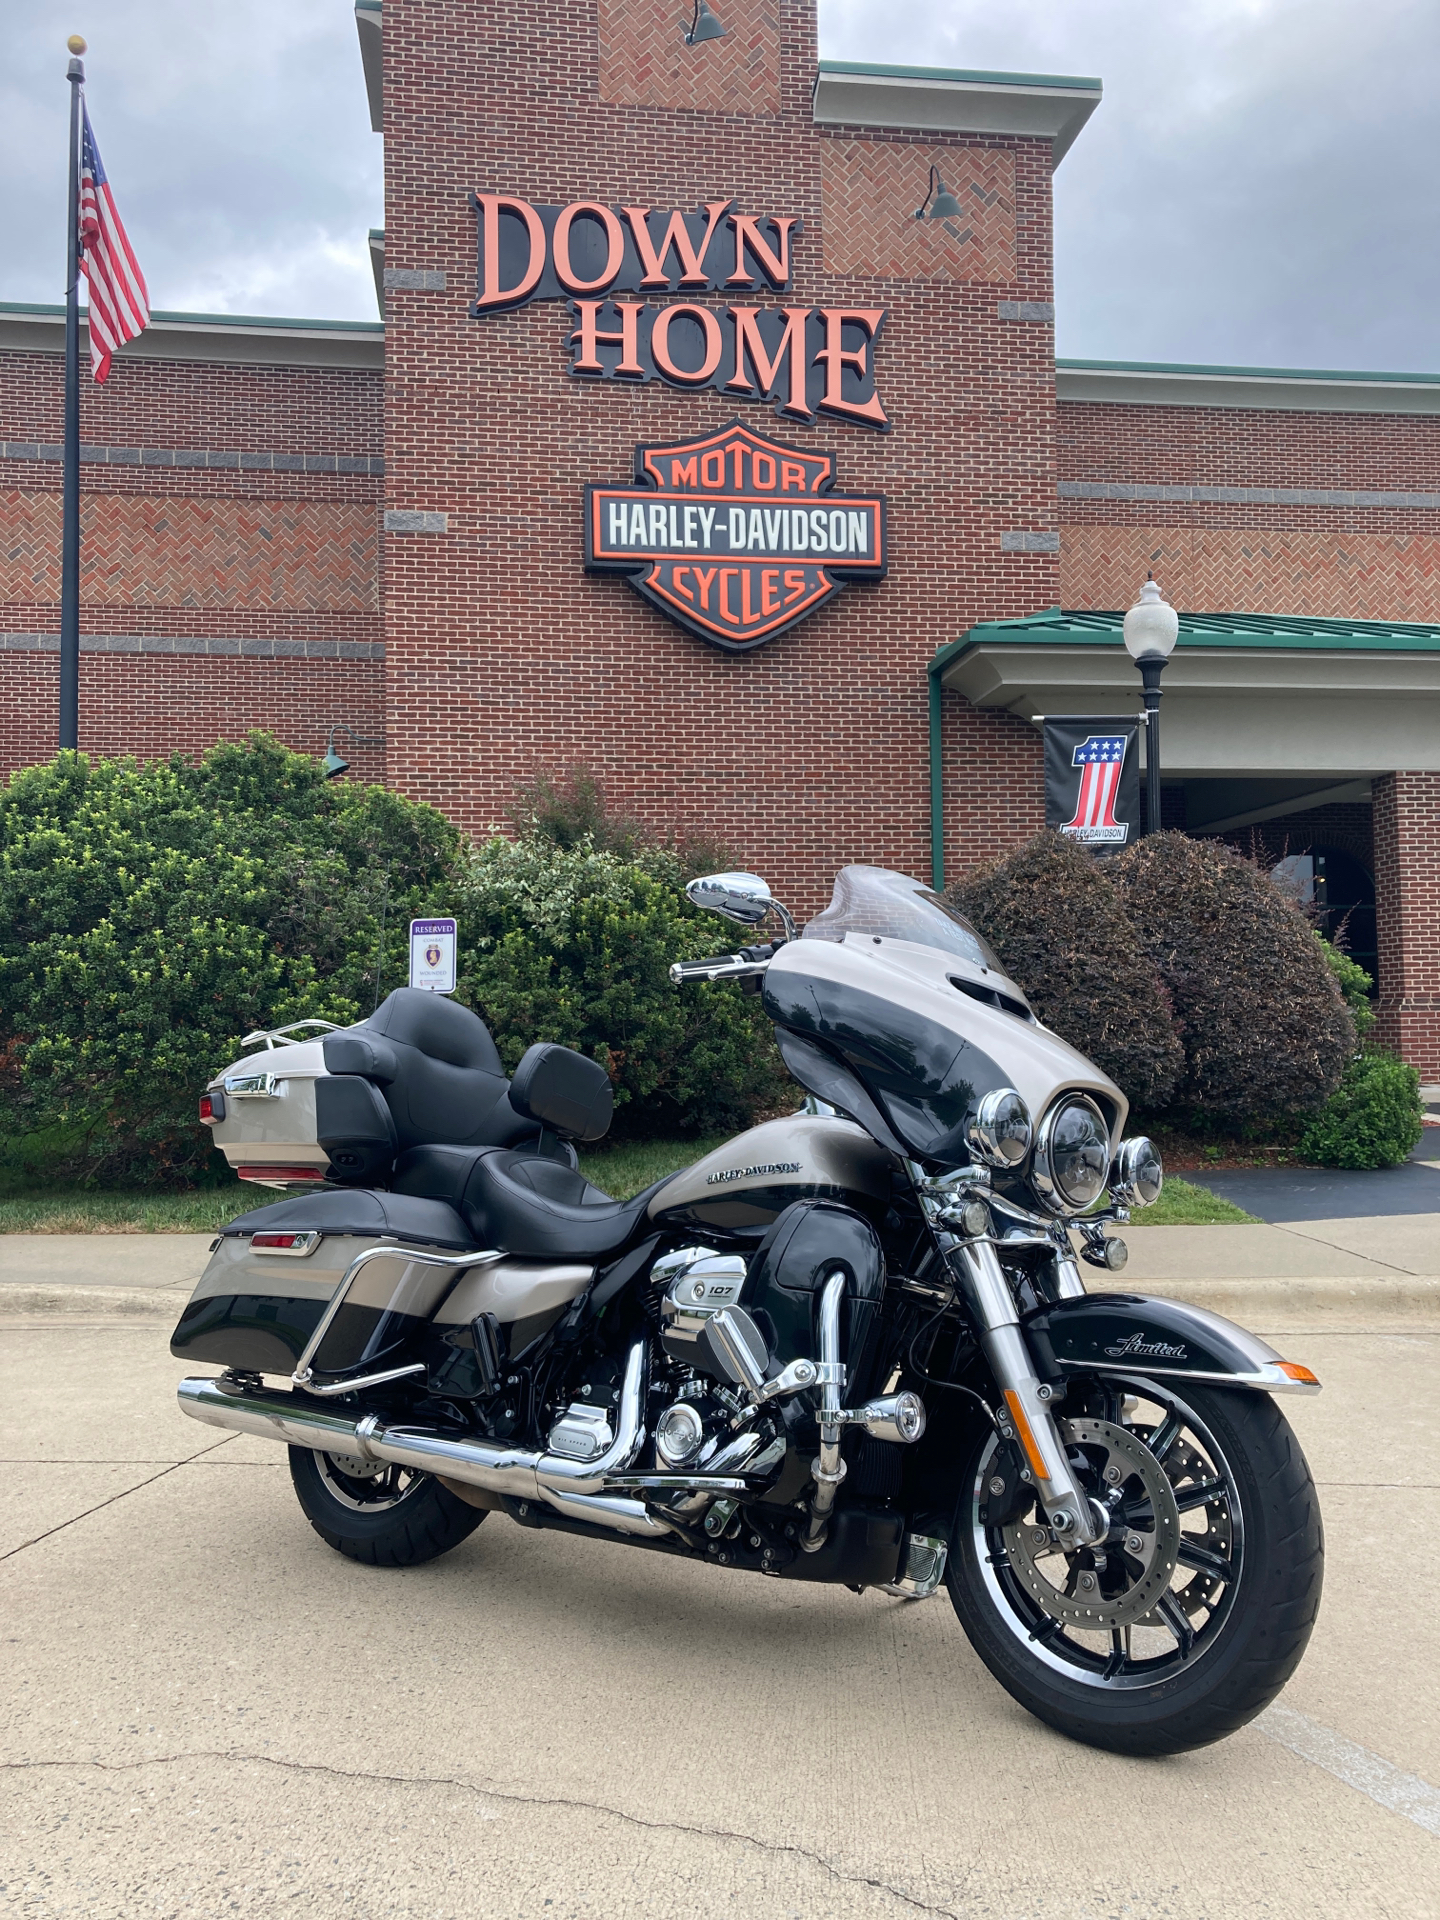 2018 Harley-Davidson Ultra Limited Low in Burlington, North Carolina - Photo 5